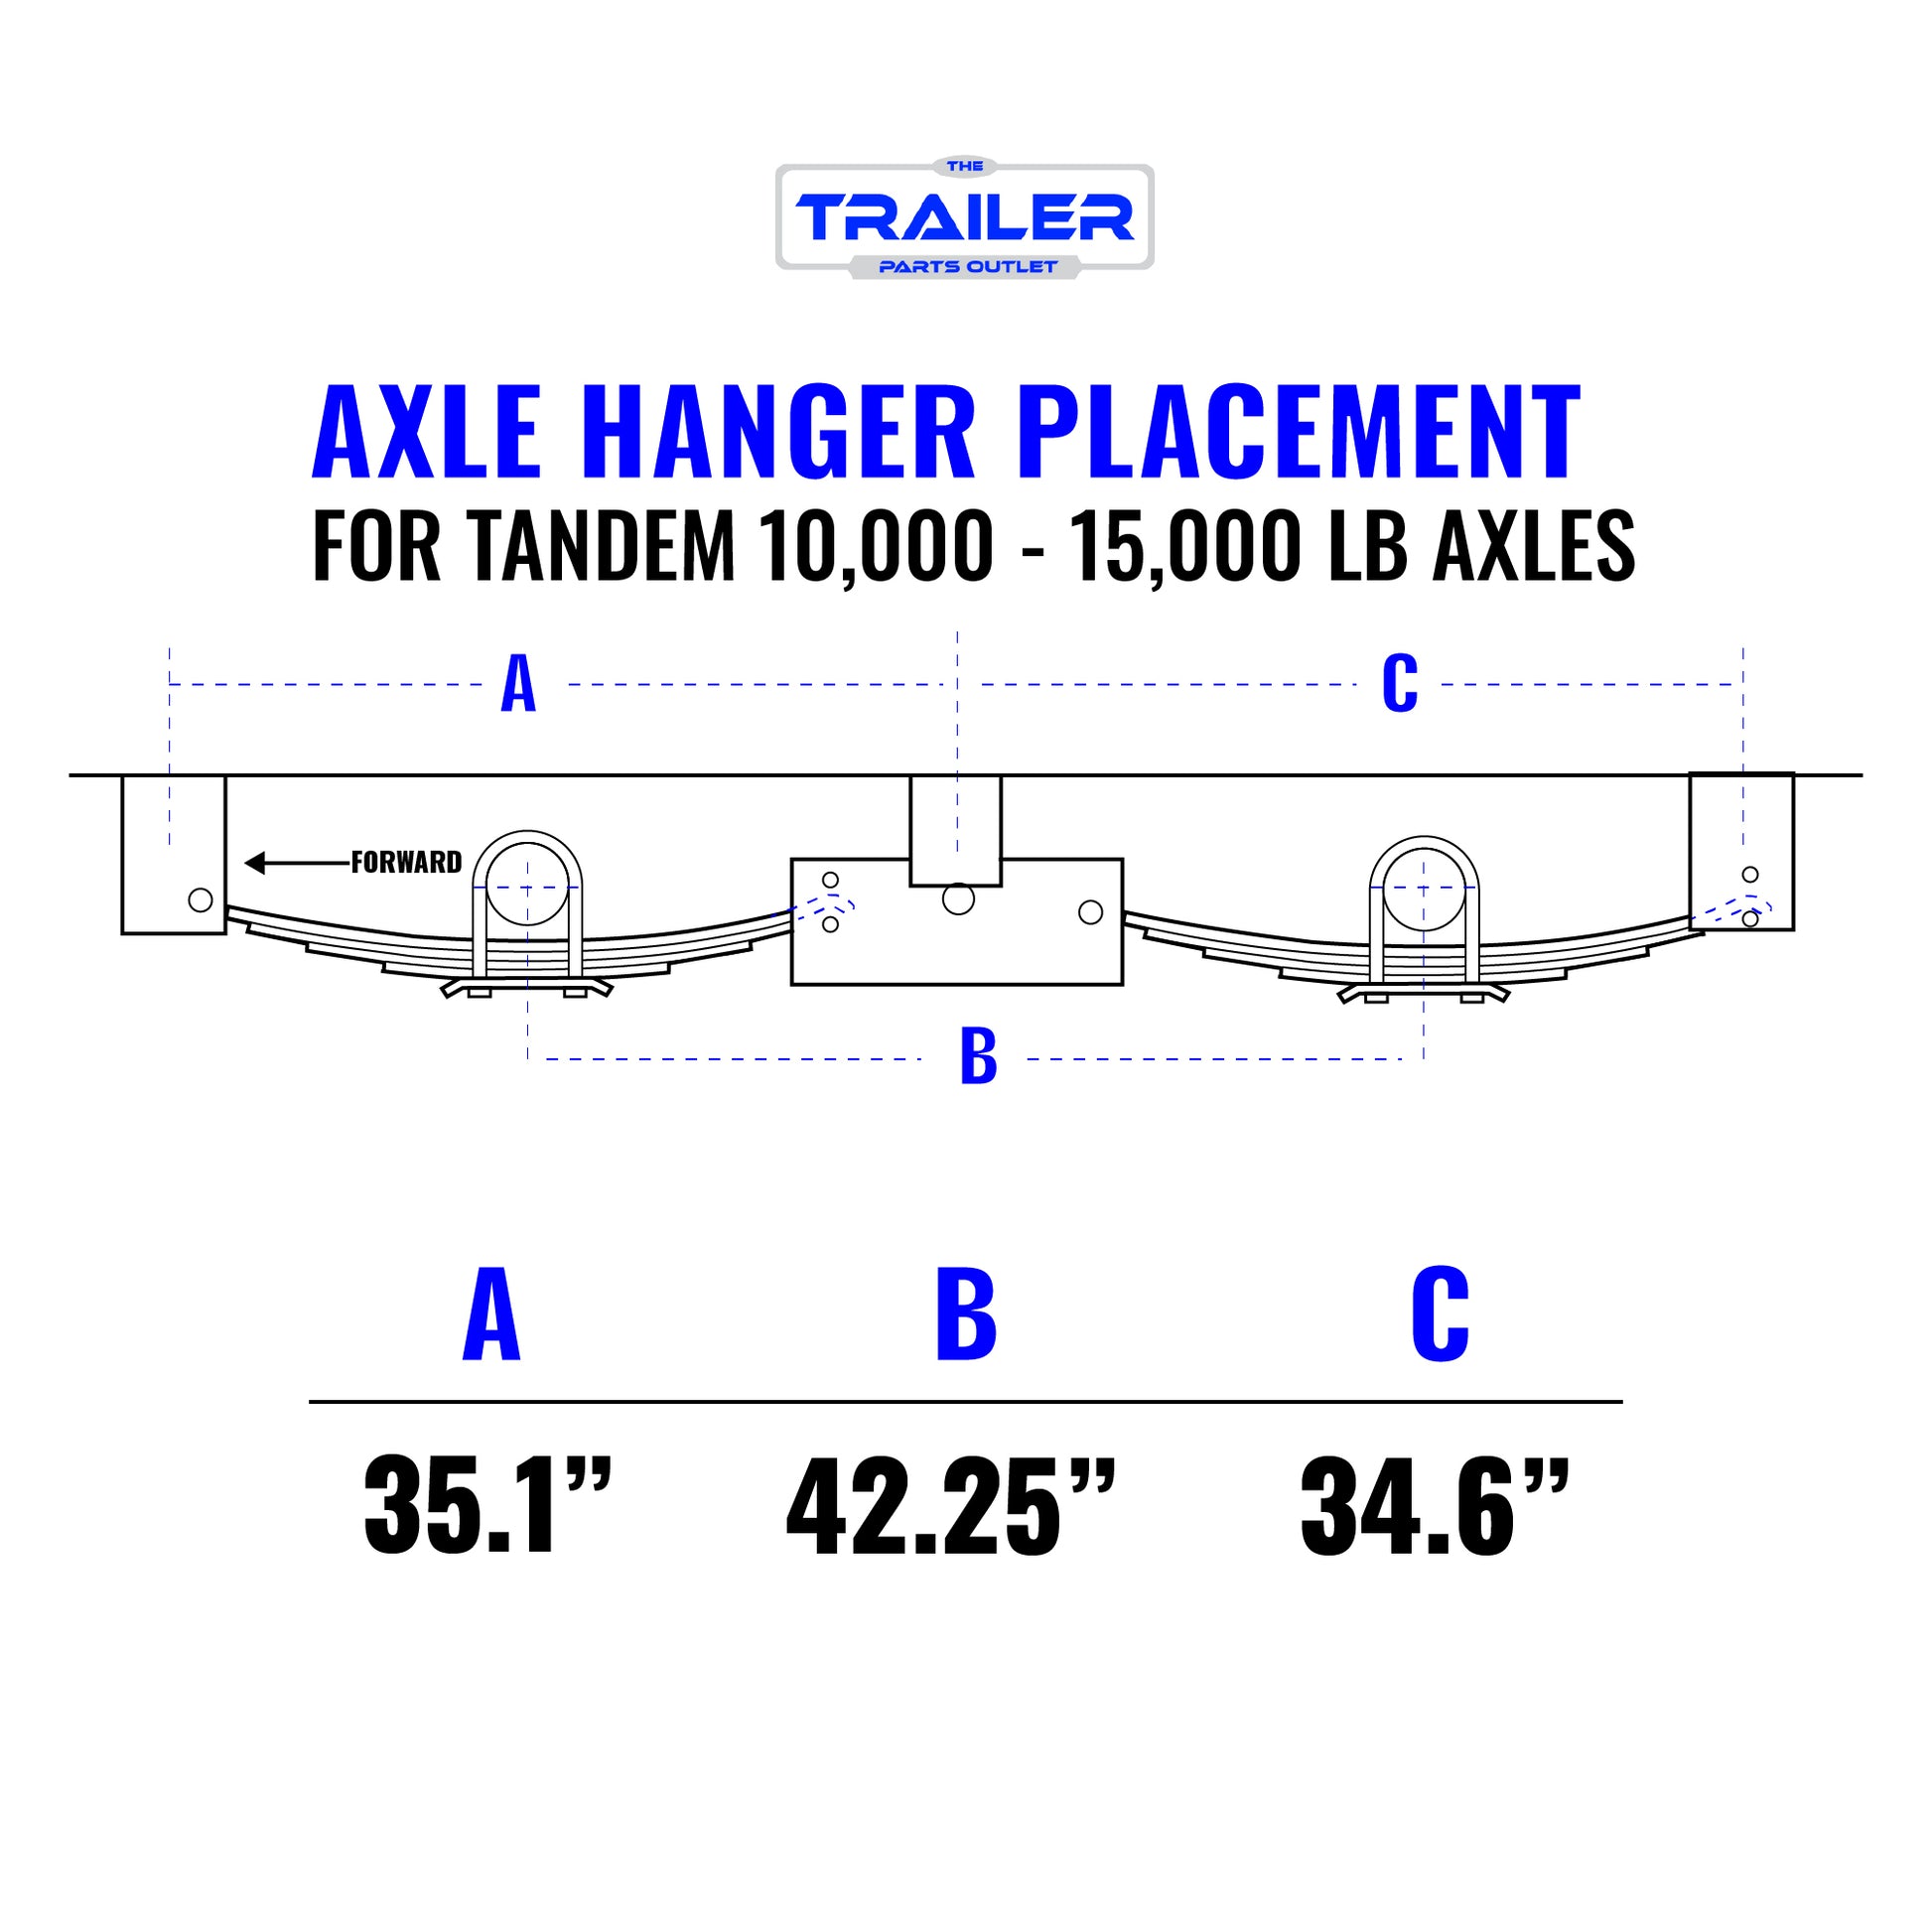 Trailer 7 Leaf Slipper Spring Suspension and Tandem Axle Hanger Kit for 5" Tubes - 15,000 - 16,000 lb Axles - The Trailer Parts Outlet